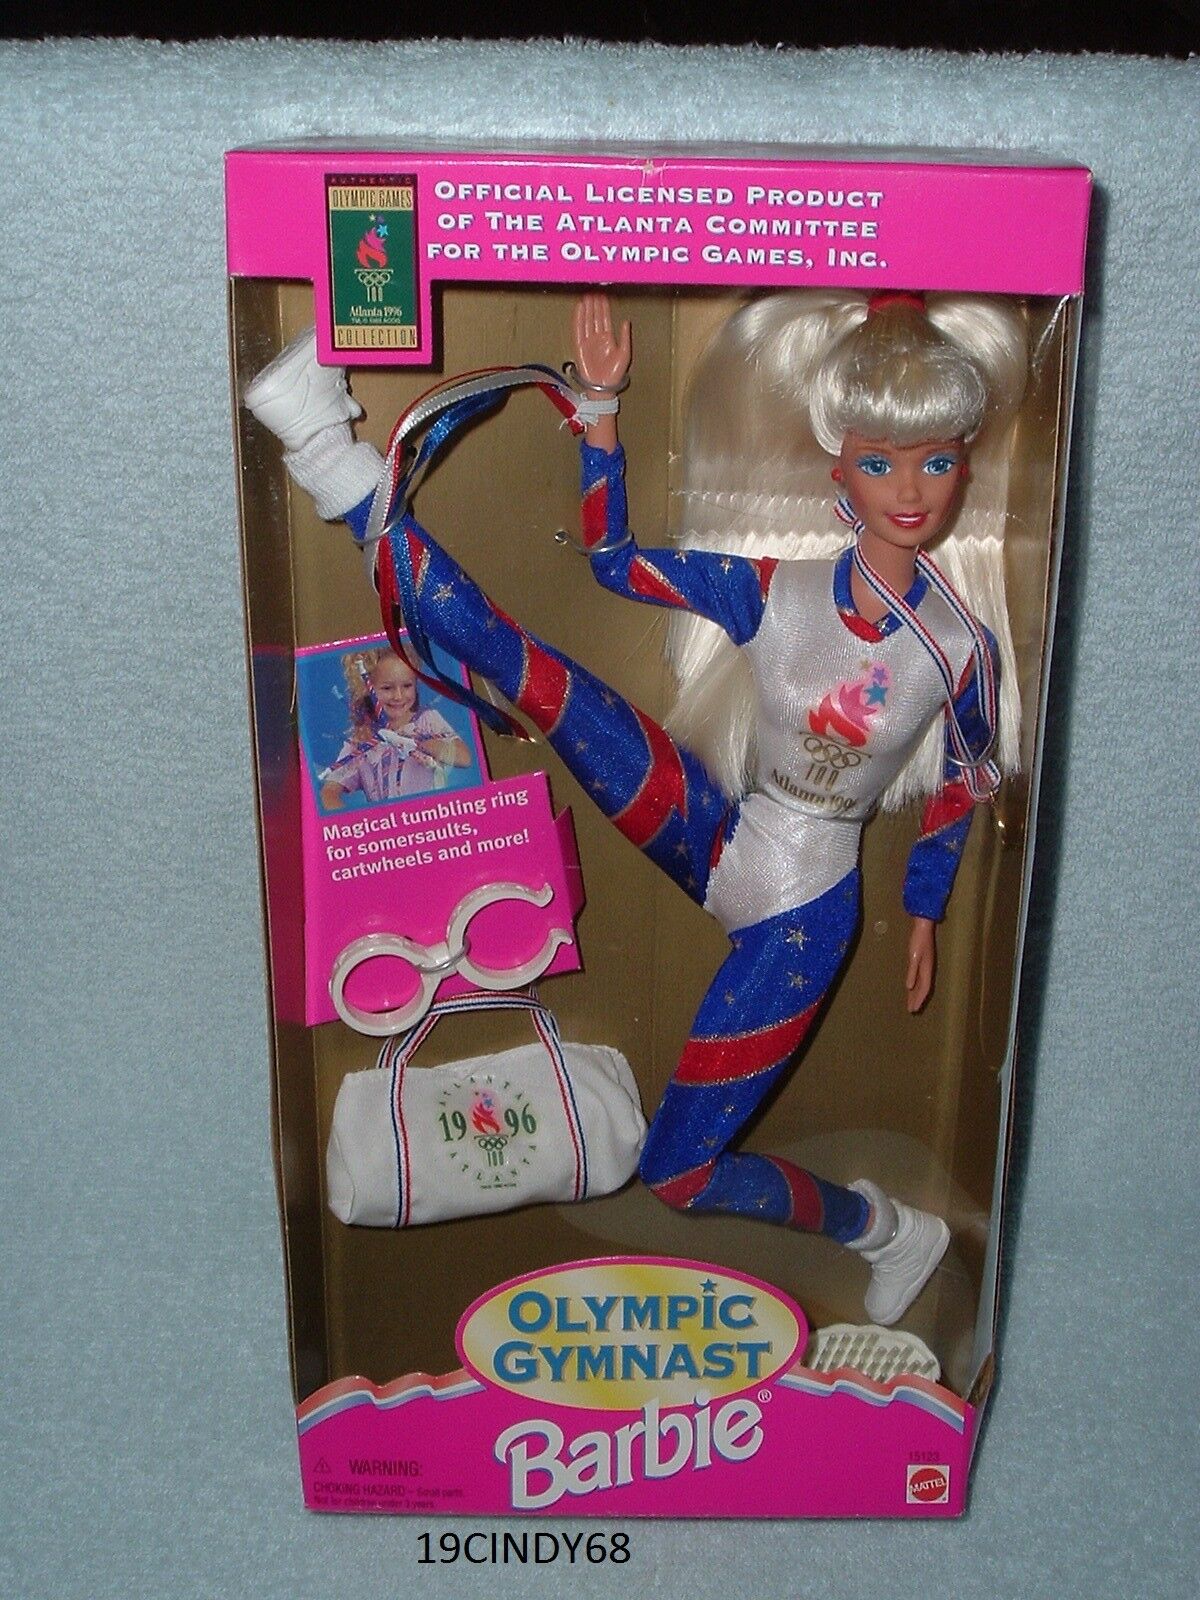 1995 "olympic Gymnast" Barbie Doll #15123 By Mattel, New In Box